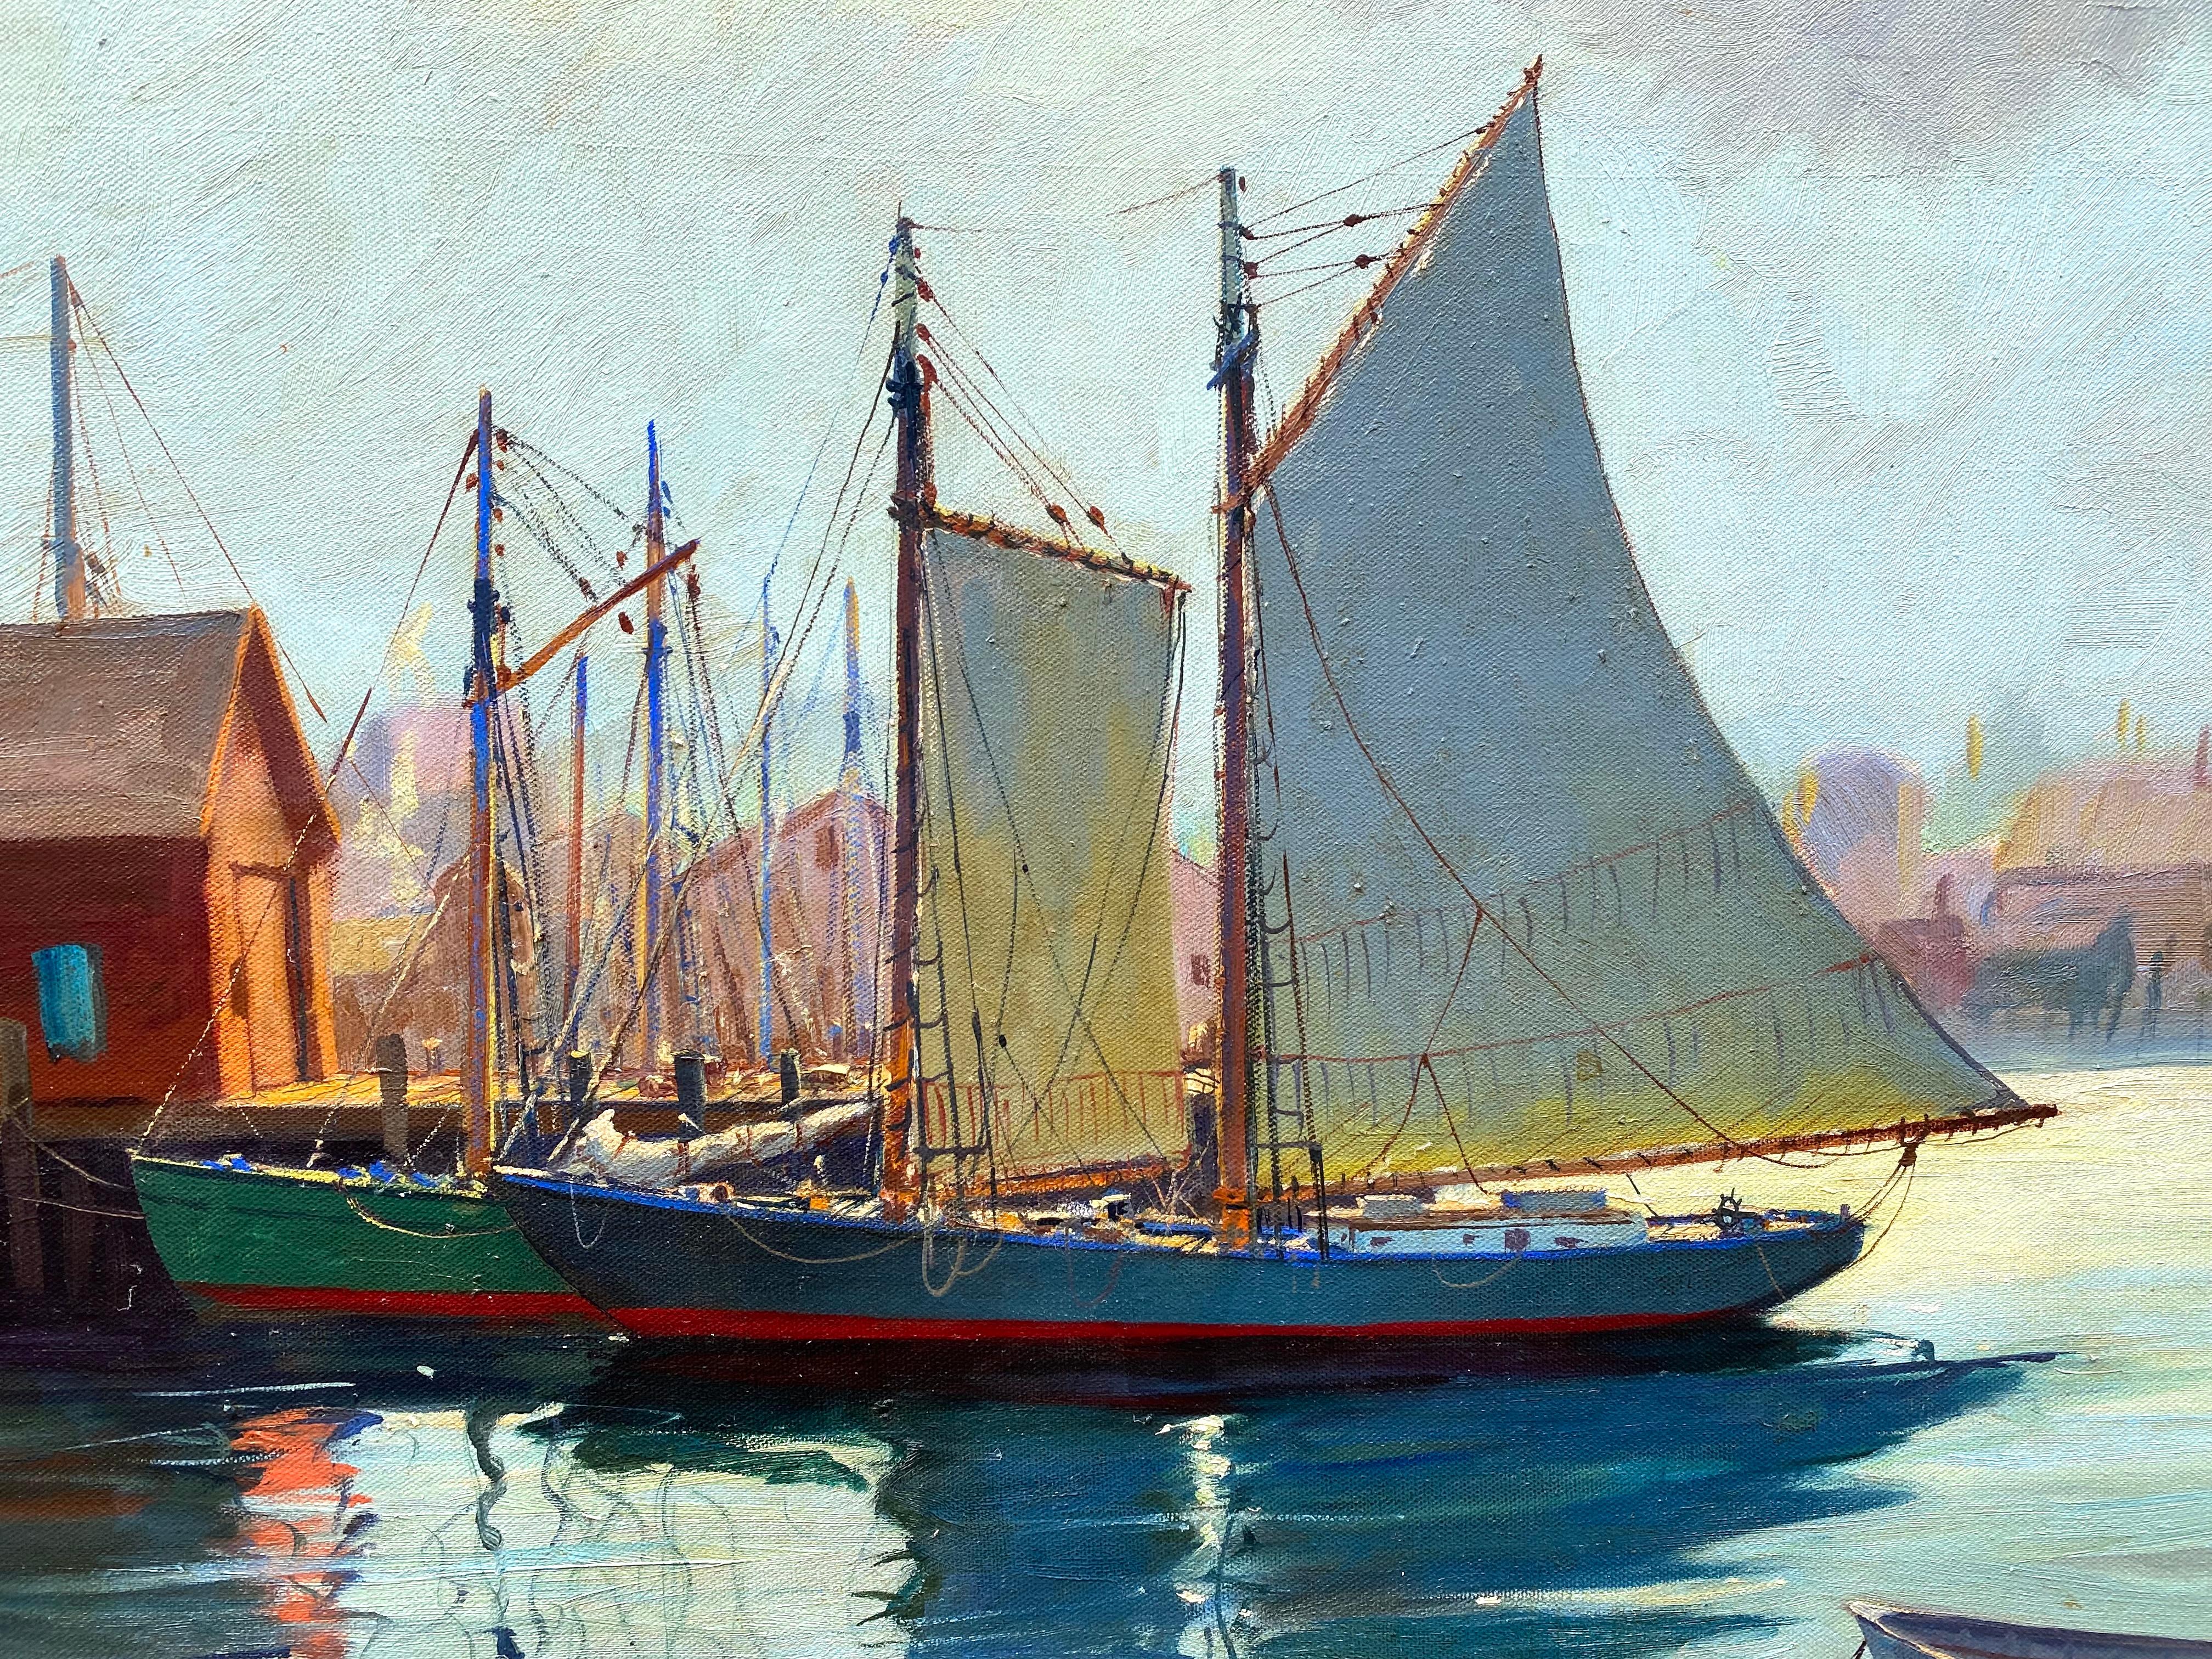 “Gloucester Harbor” - Painting by C. Hjalmar Amundsen